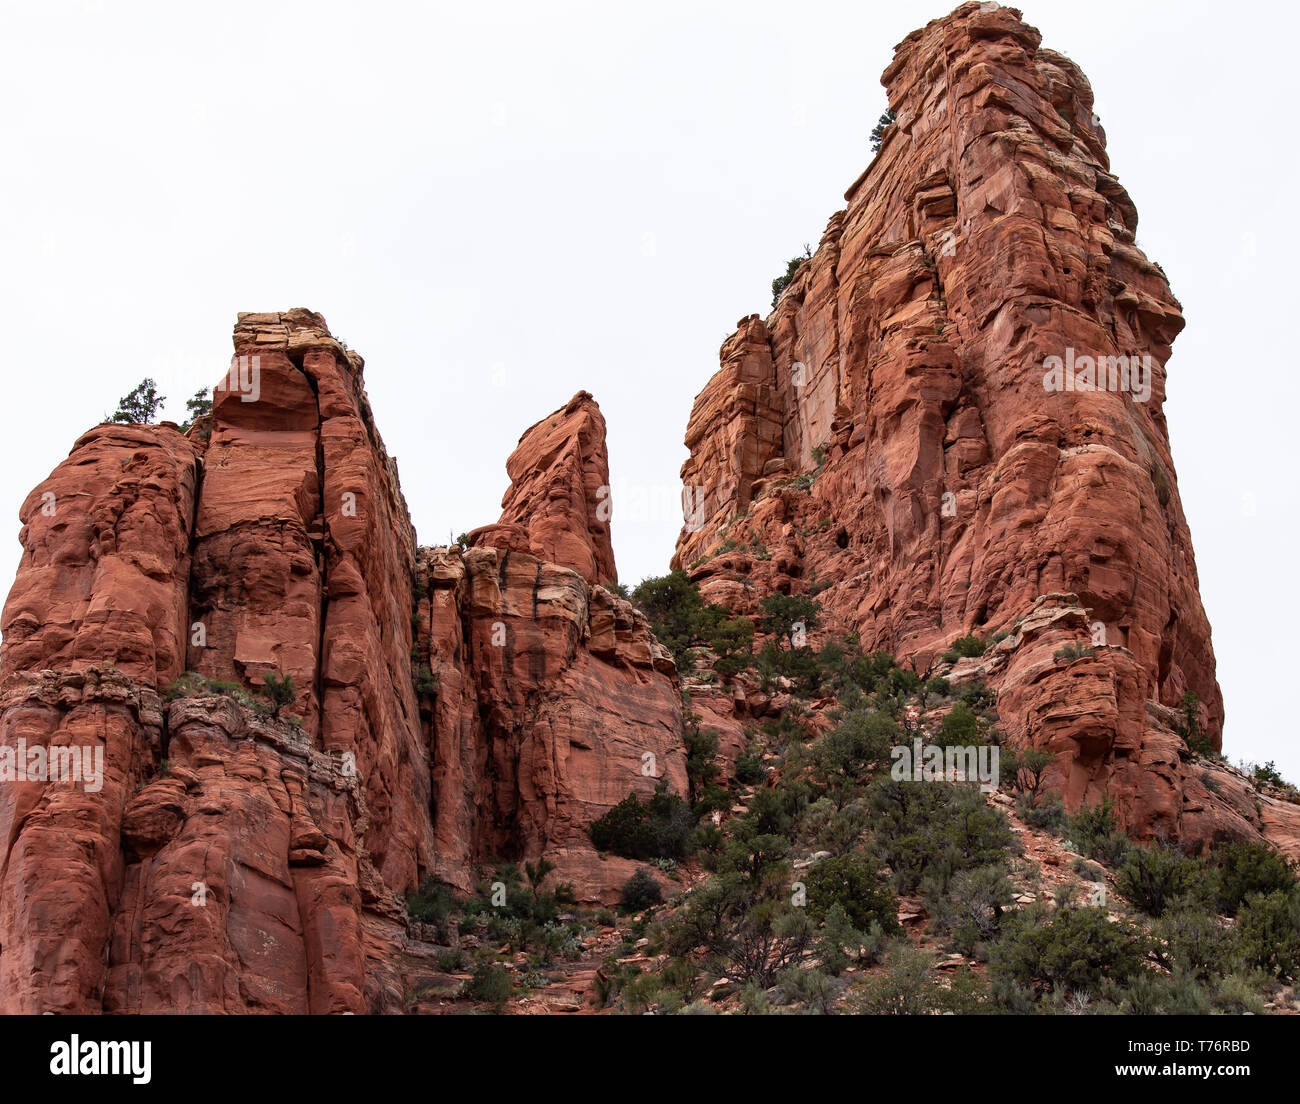 Arizona, Sedona, USA - World Famous Red Mountains and Canyon. Stock Photo